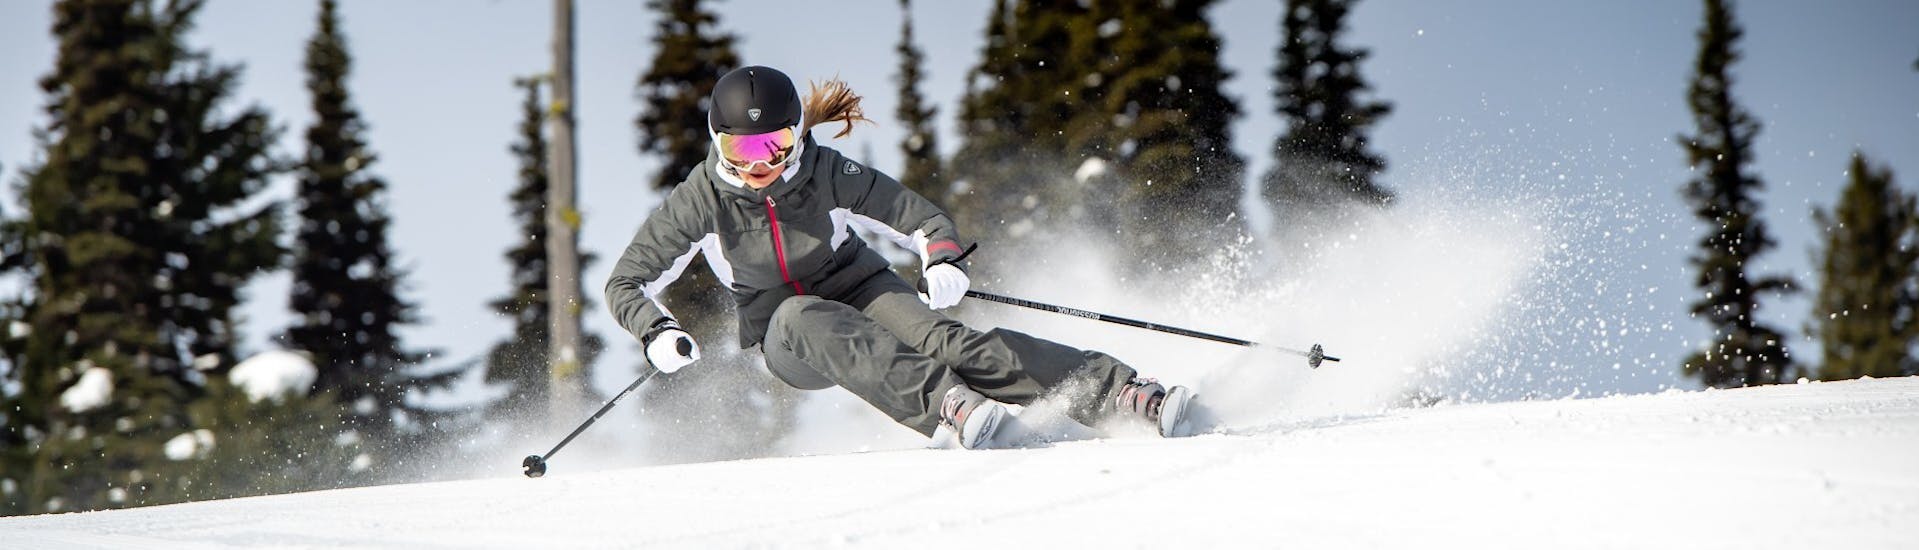 Private Ski Lessons for Intermediate and Advanced Adults with Ski School BERGSPORT JA Oberstdorf - Hero image